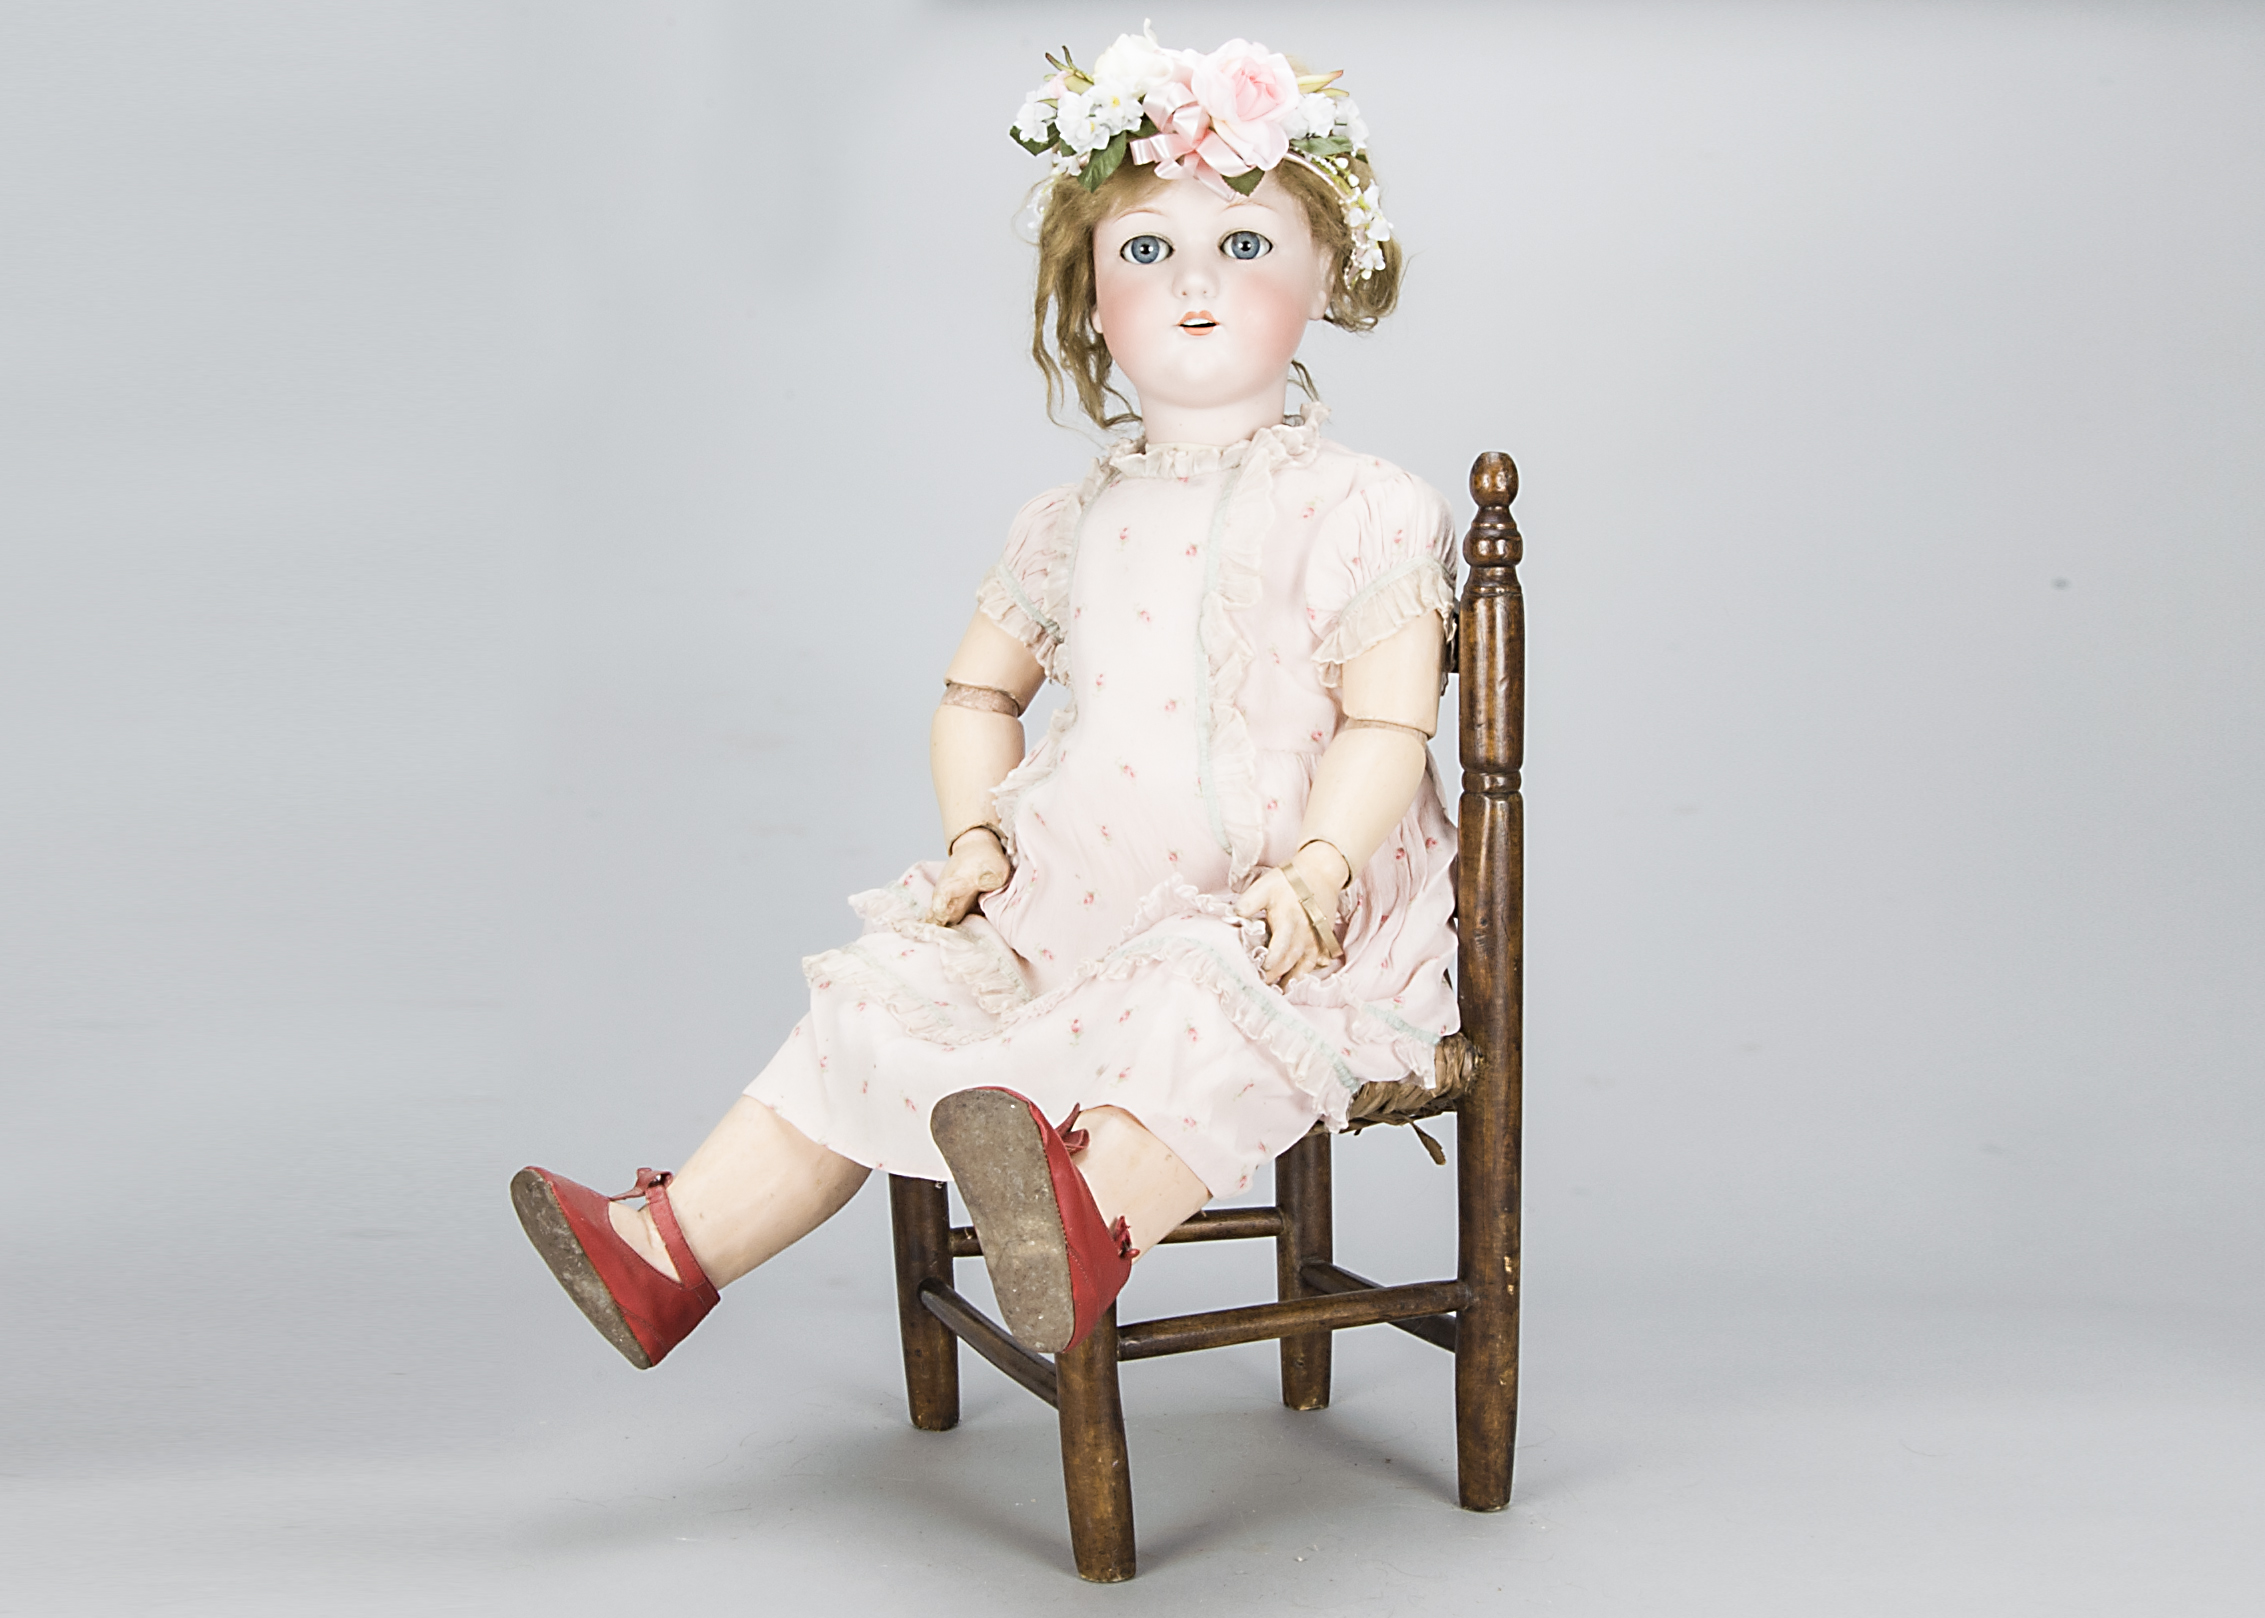 A Schoenau & Hoffmeister 1909 child doll, with blue sleeping eyes, blonde hair wig, jointed